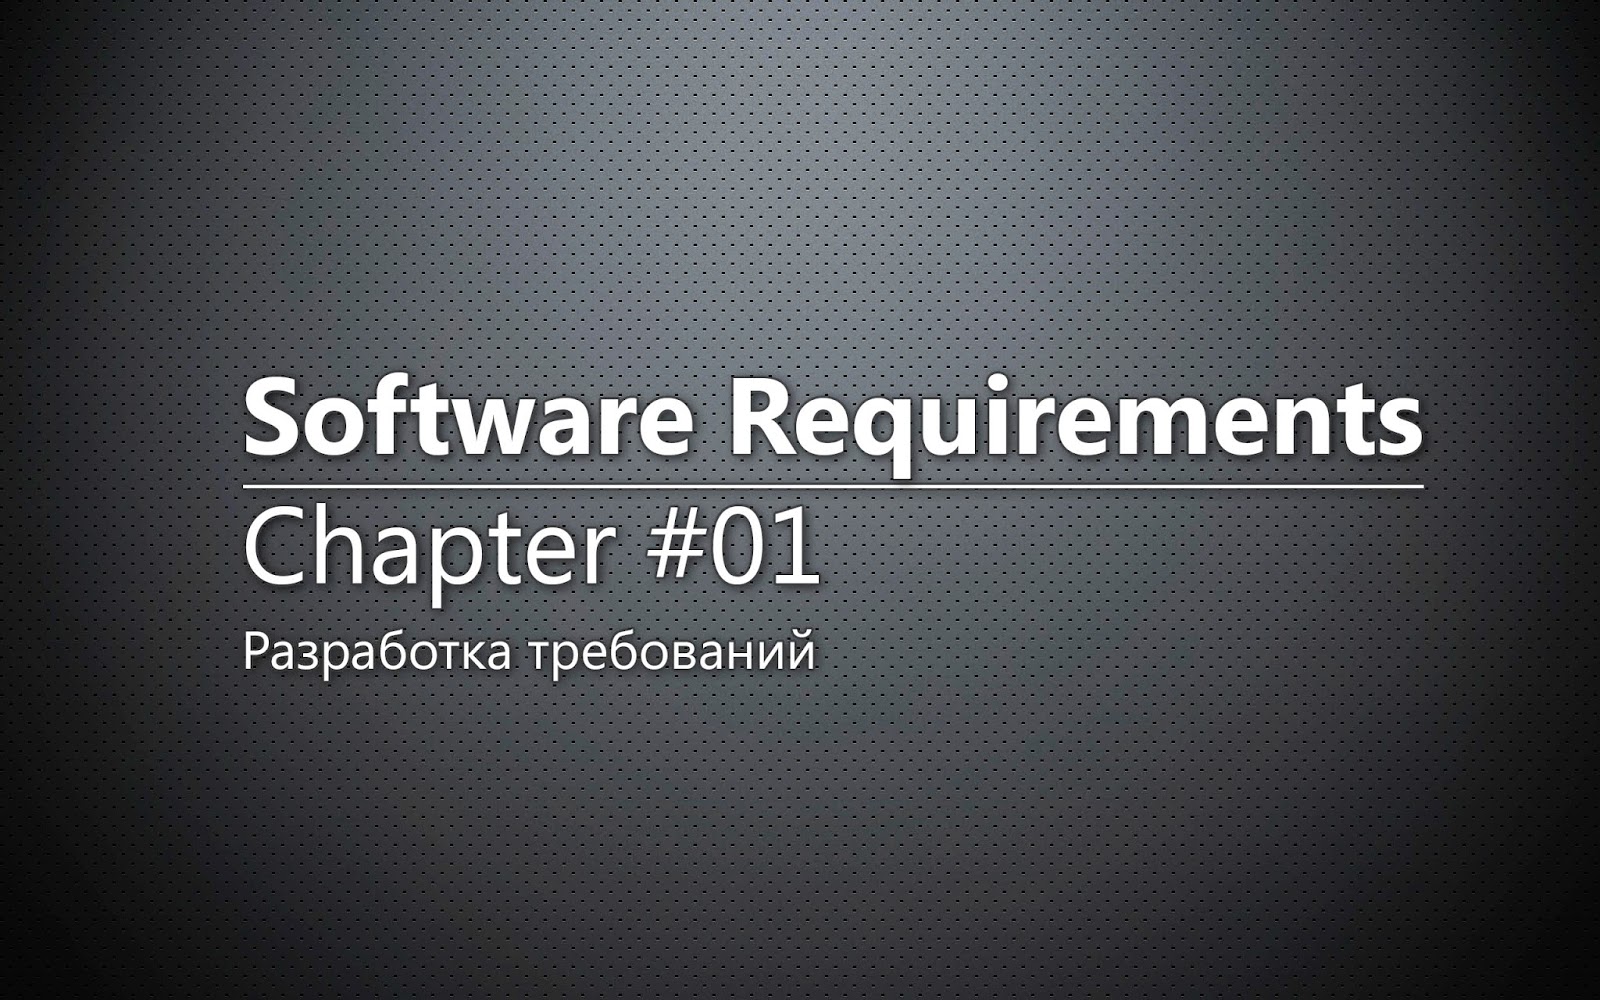 Software Requirements. Разработка требований.